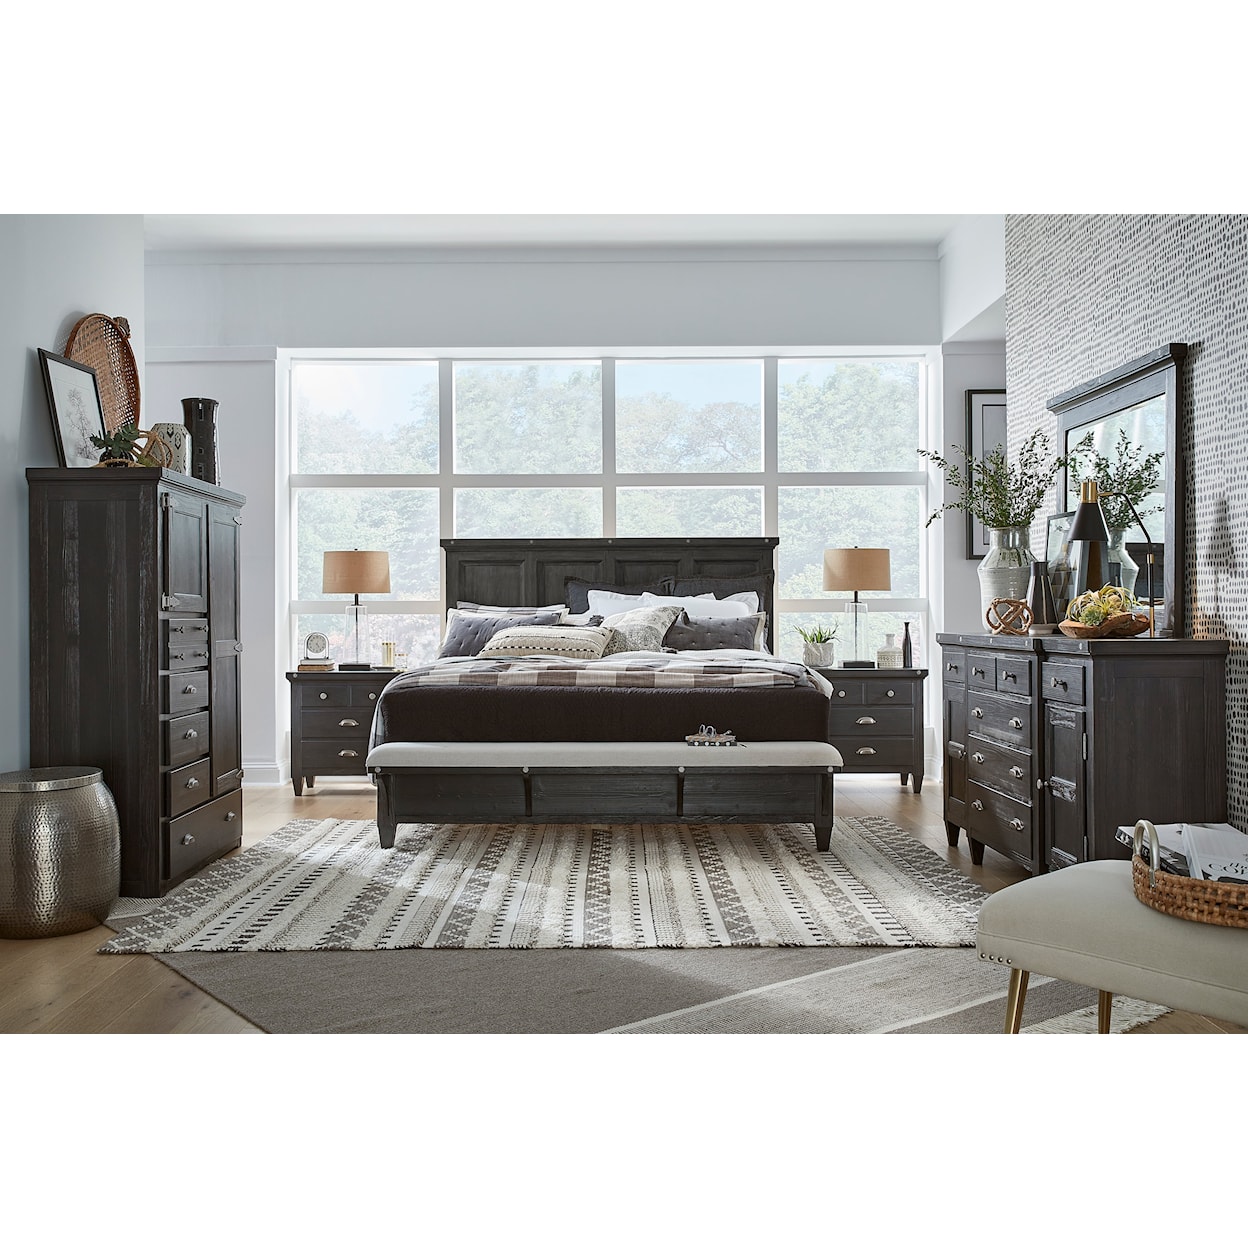 Magnussen Home Sierra Bedroom King Panel Bed with Bench